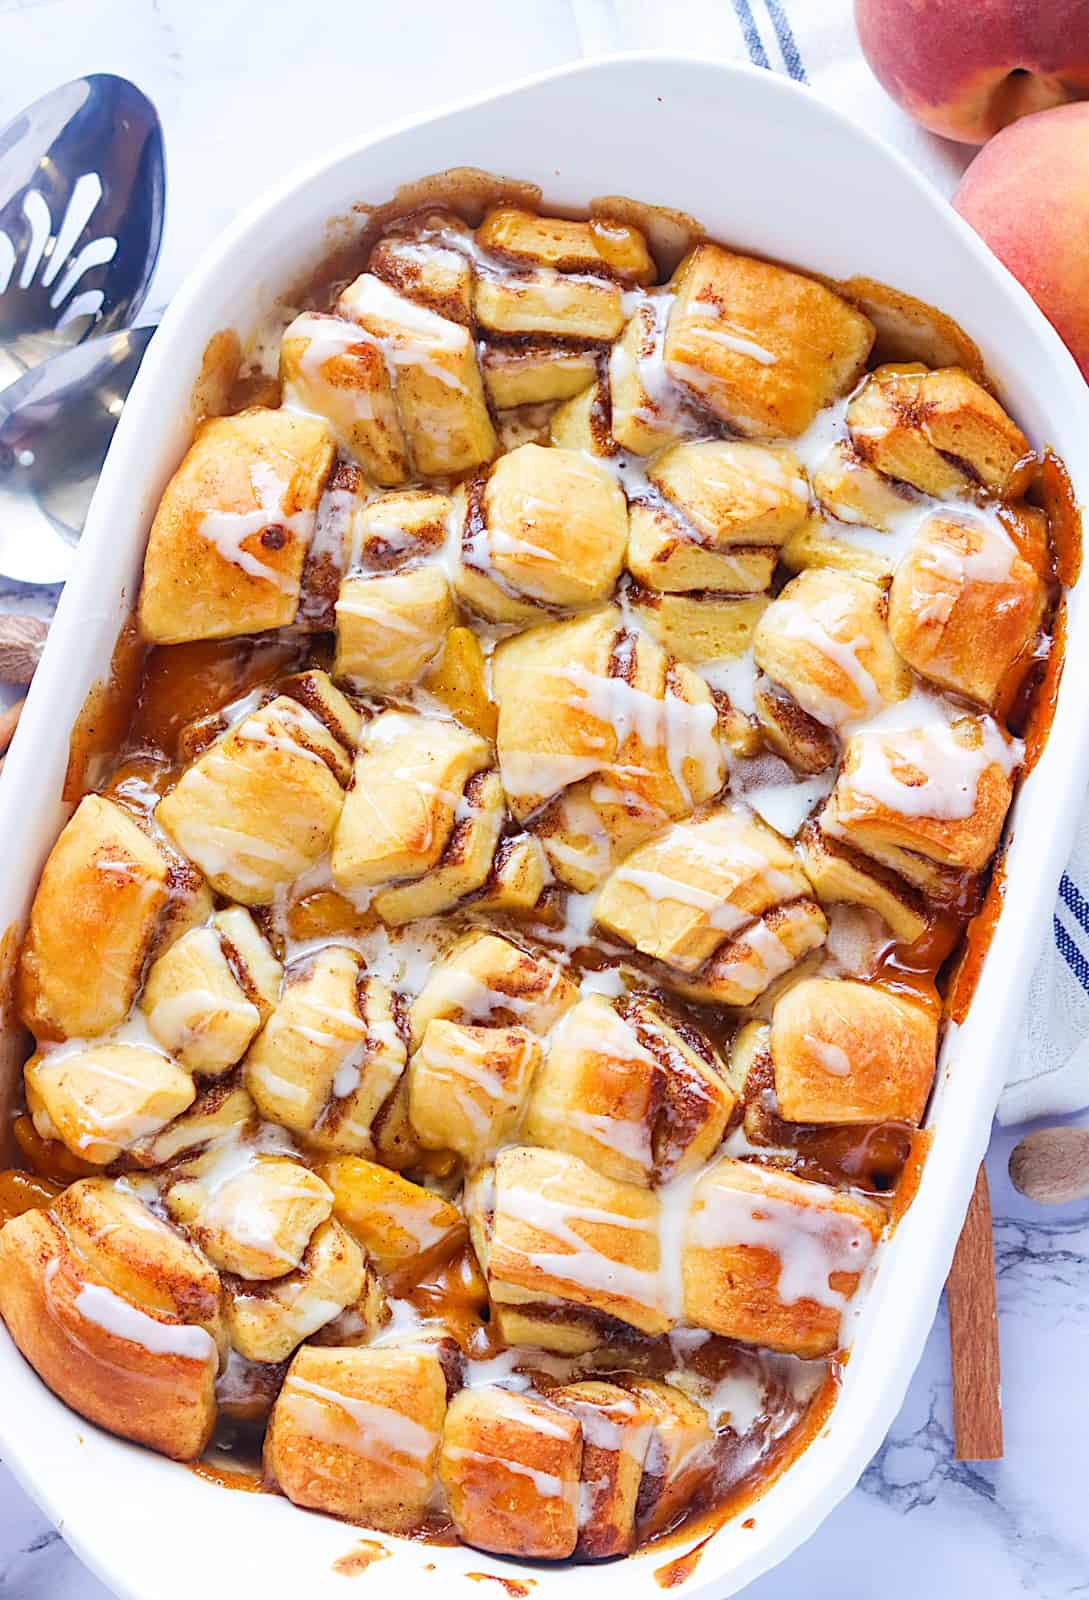 Glazed Cinnamon Roll Peach Cobbler for the ultimate comfort food dessert